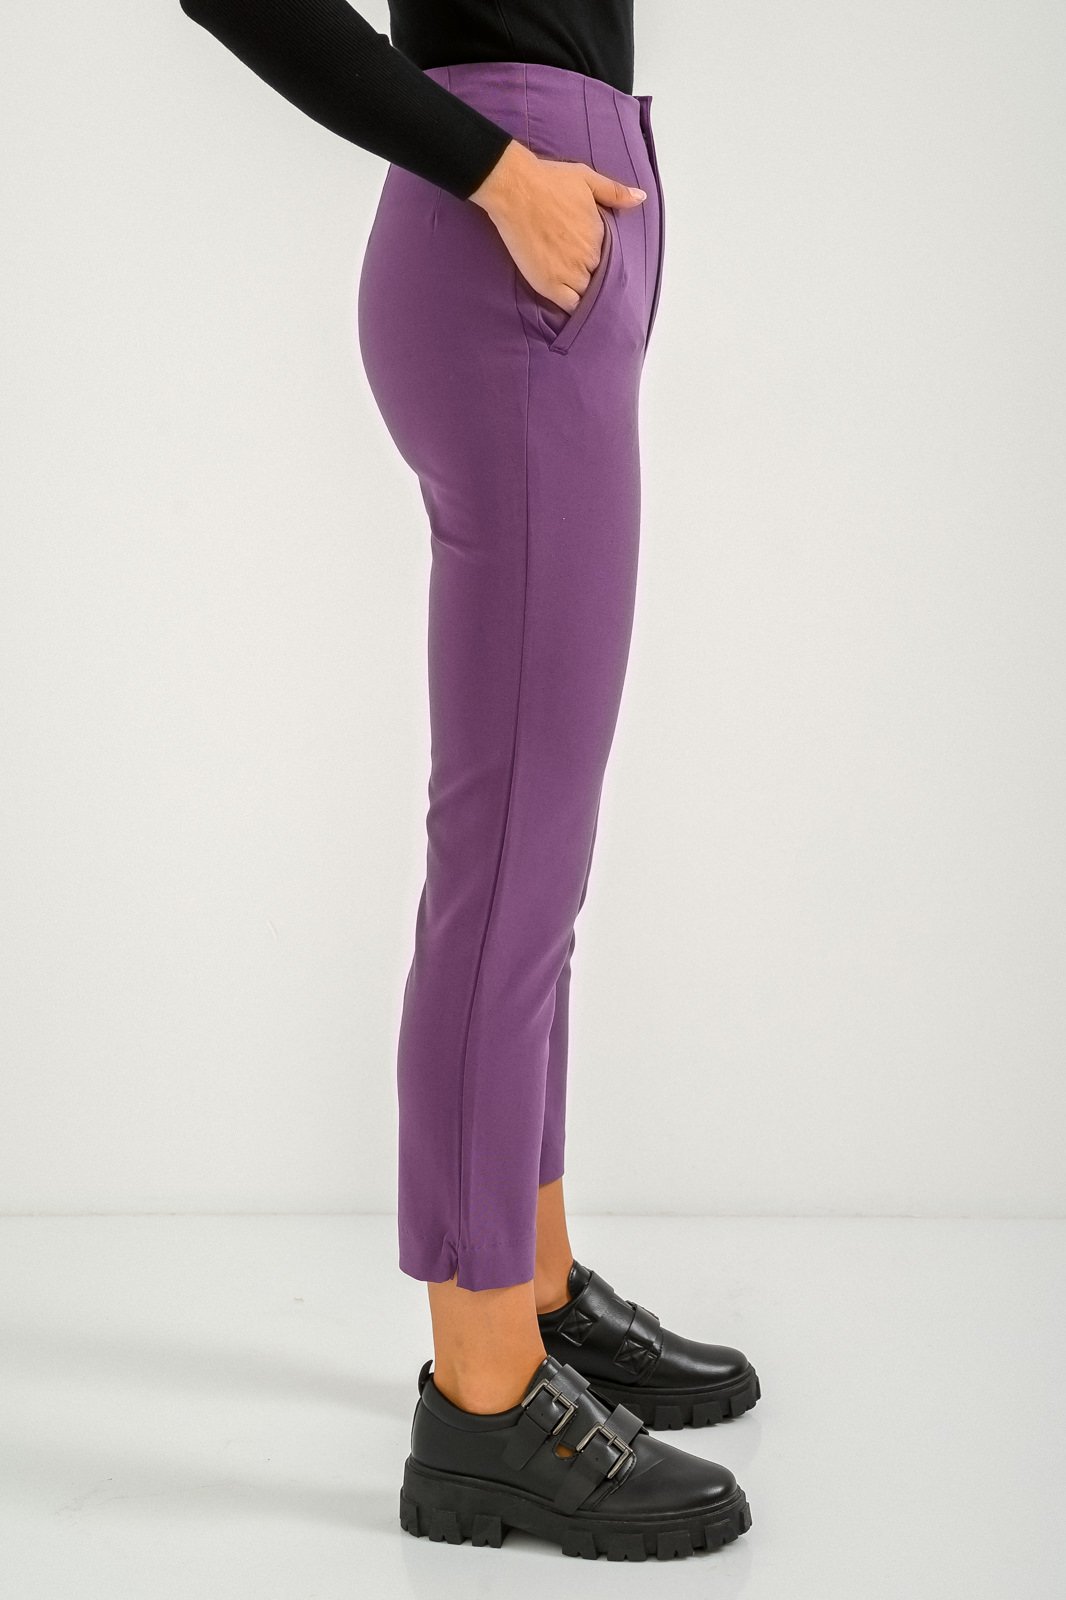 Casual Plain Tapered/Carrot Khaki Women's Pants (Women's) - Walmart.com